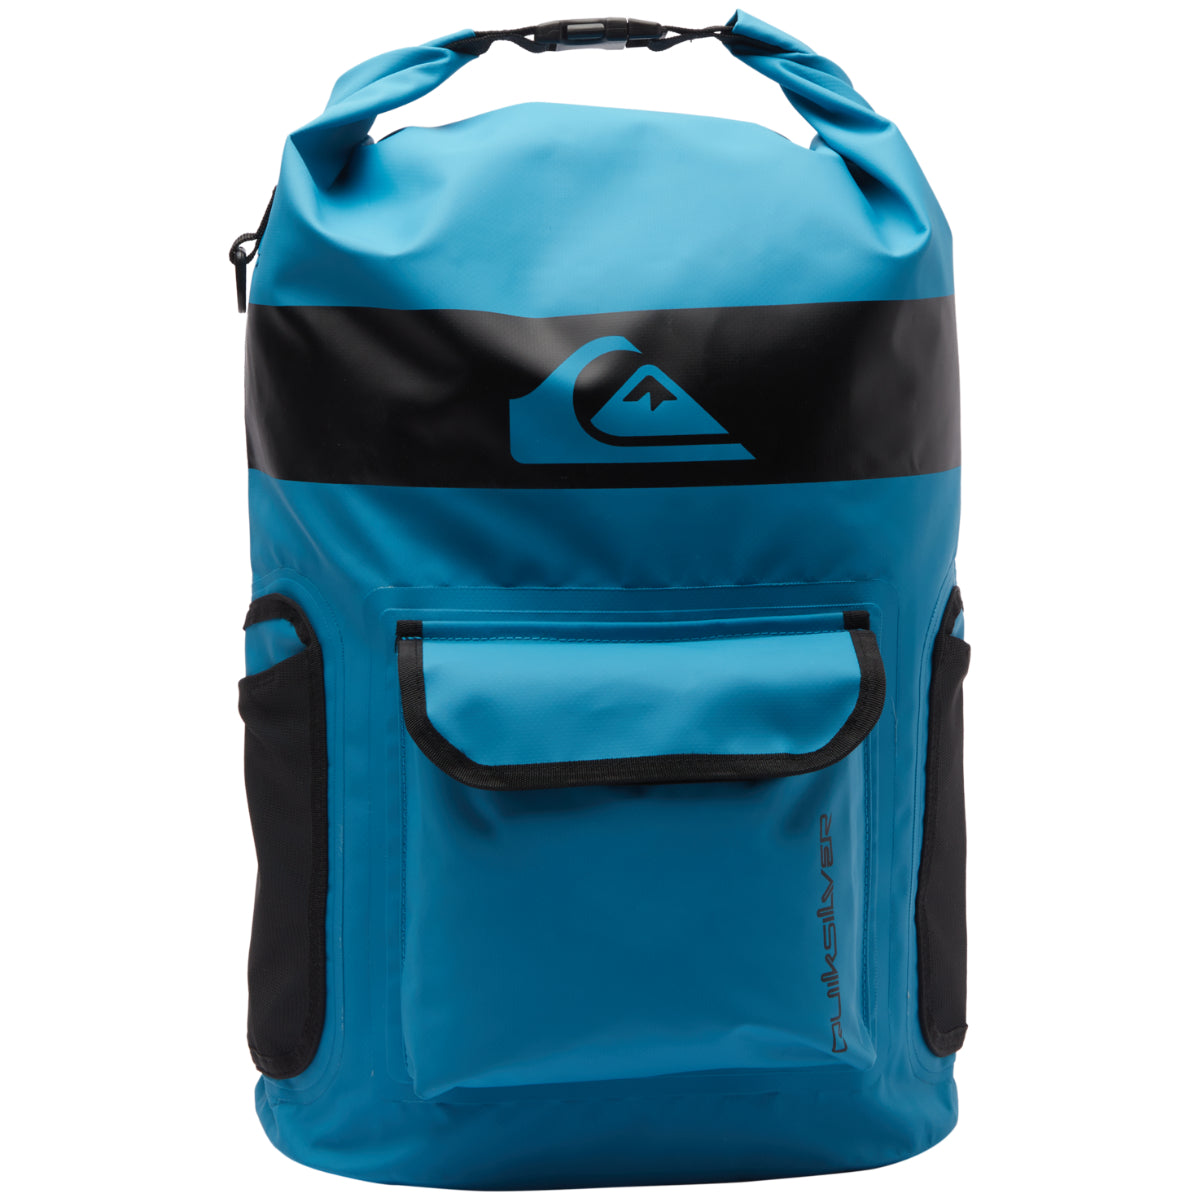 Blue Rainbow Strap Barrel Handbag- Order Wholesale